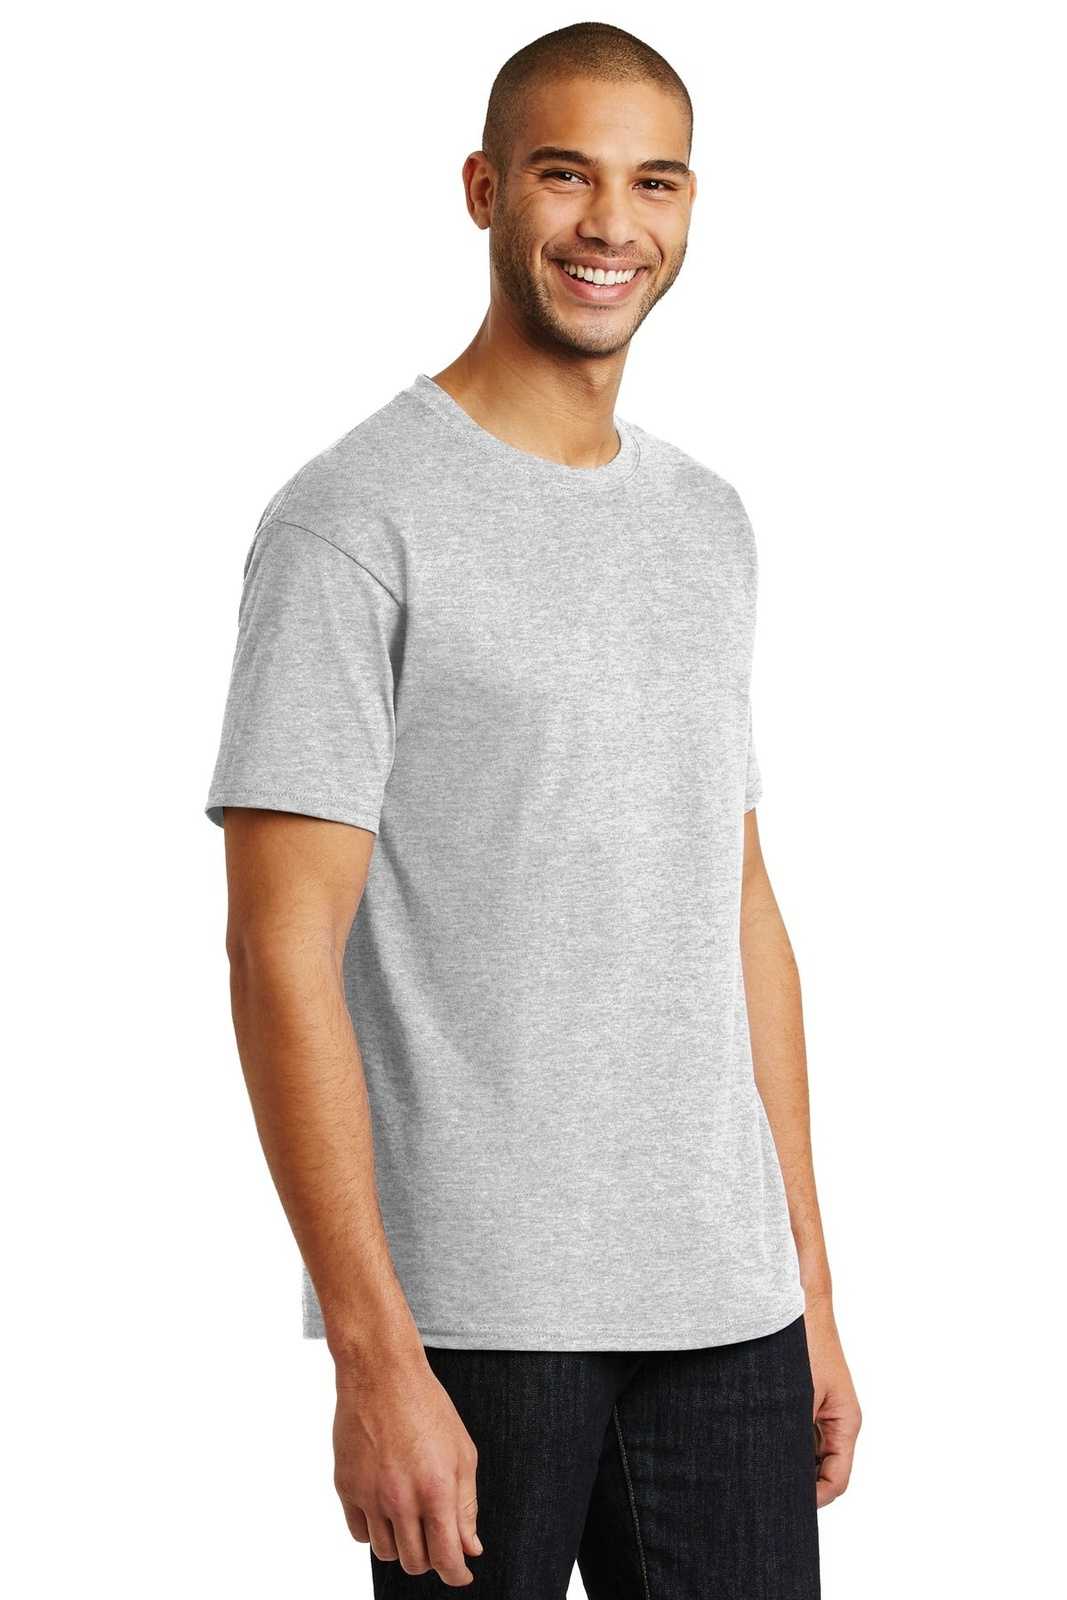 Hanes 5250 Tagless 100% Cotton T-Shirt - Ash - HIT a Double